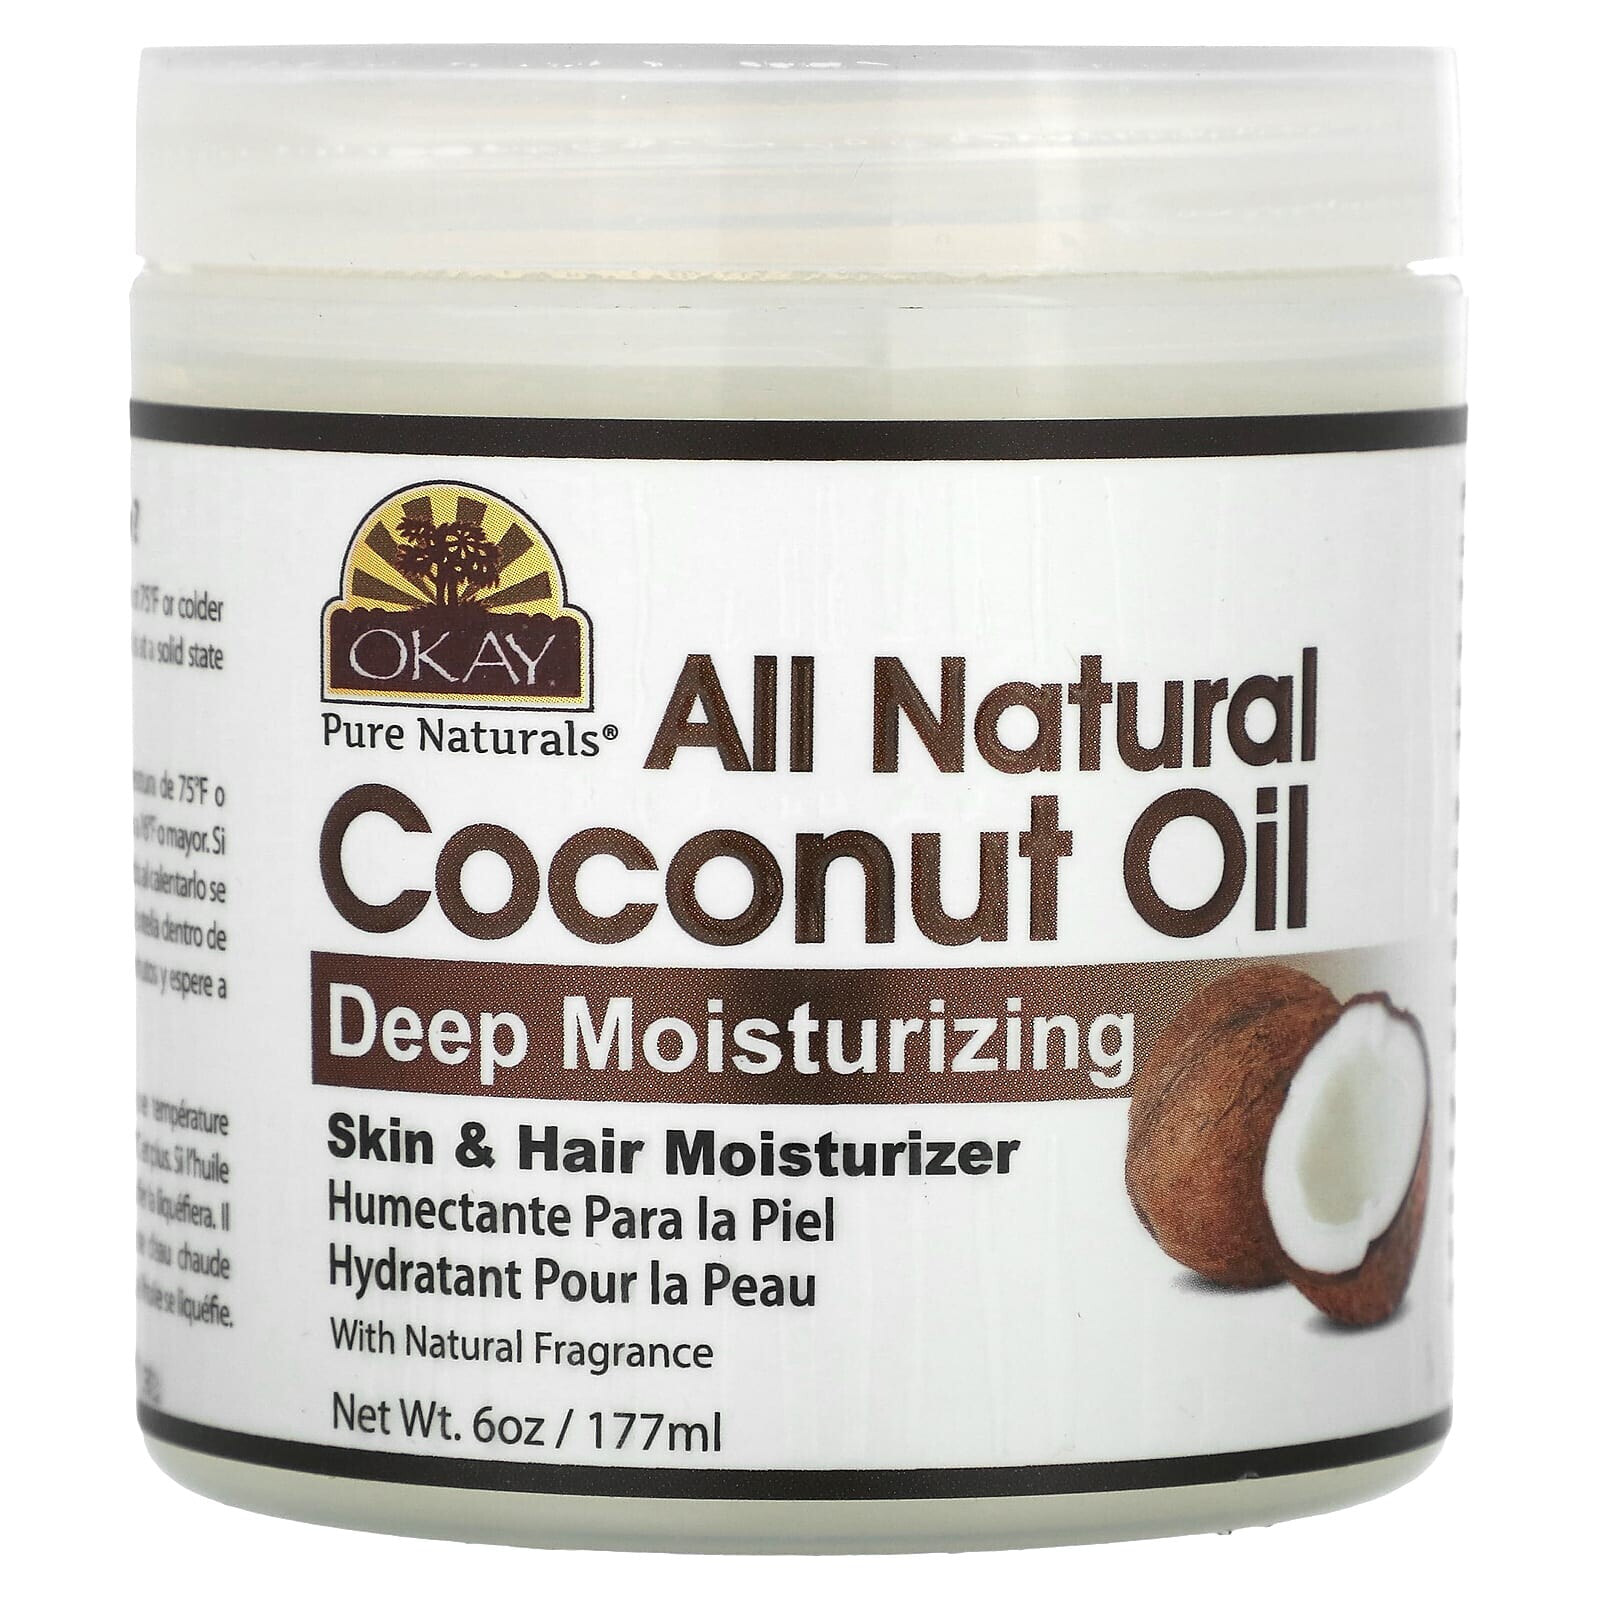 All Natural Coconut Oil, Deep Moisturizing, 6 oz (177 ml)